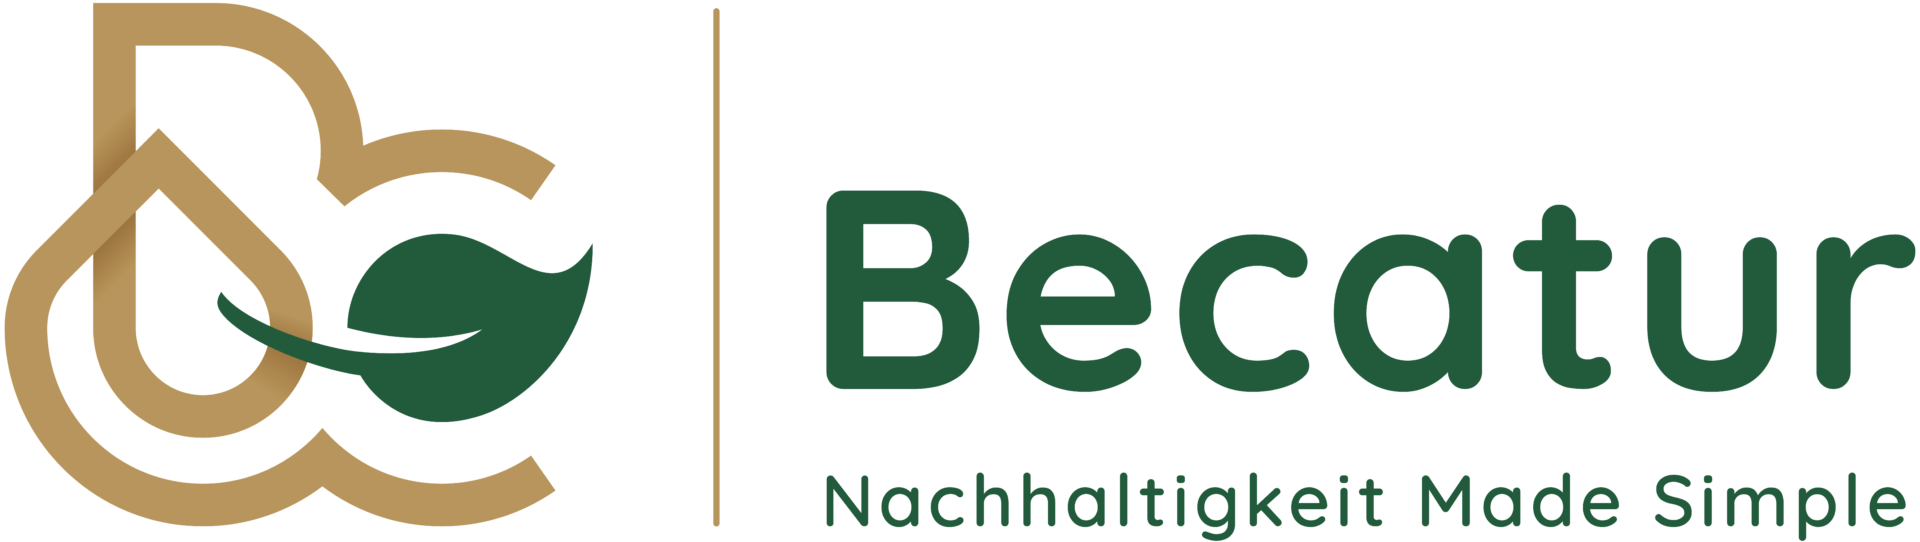 Becatur_Logo-Wort-Bildmarke_horizontal_RGB